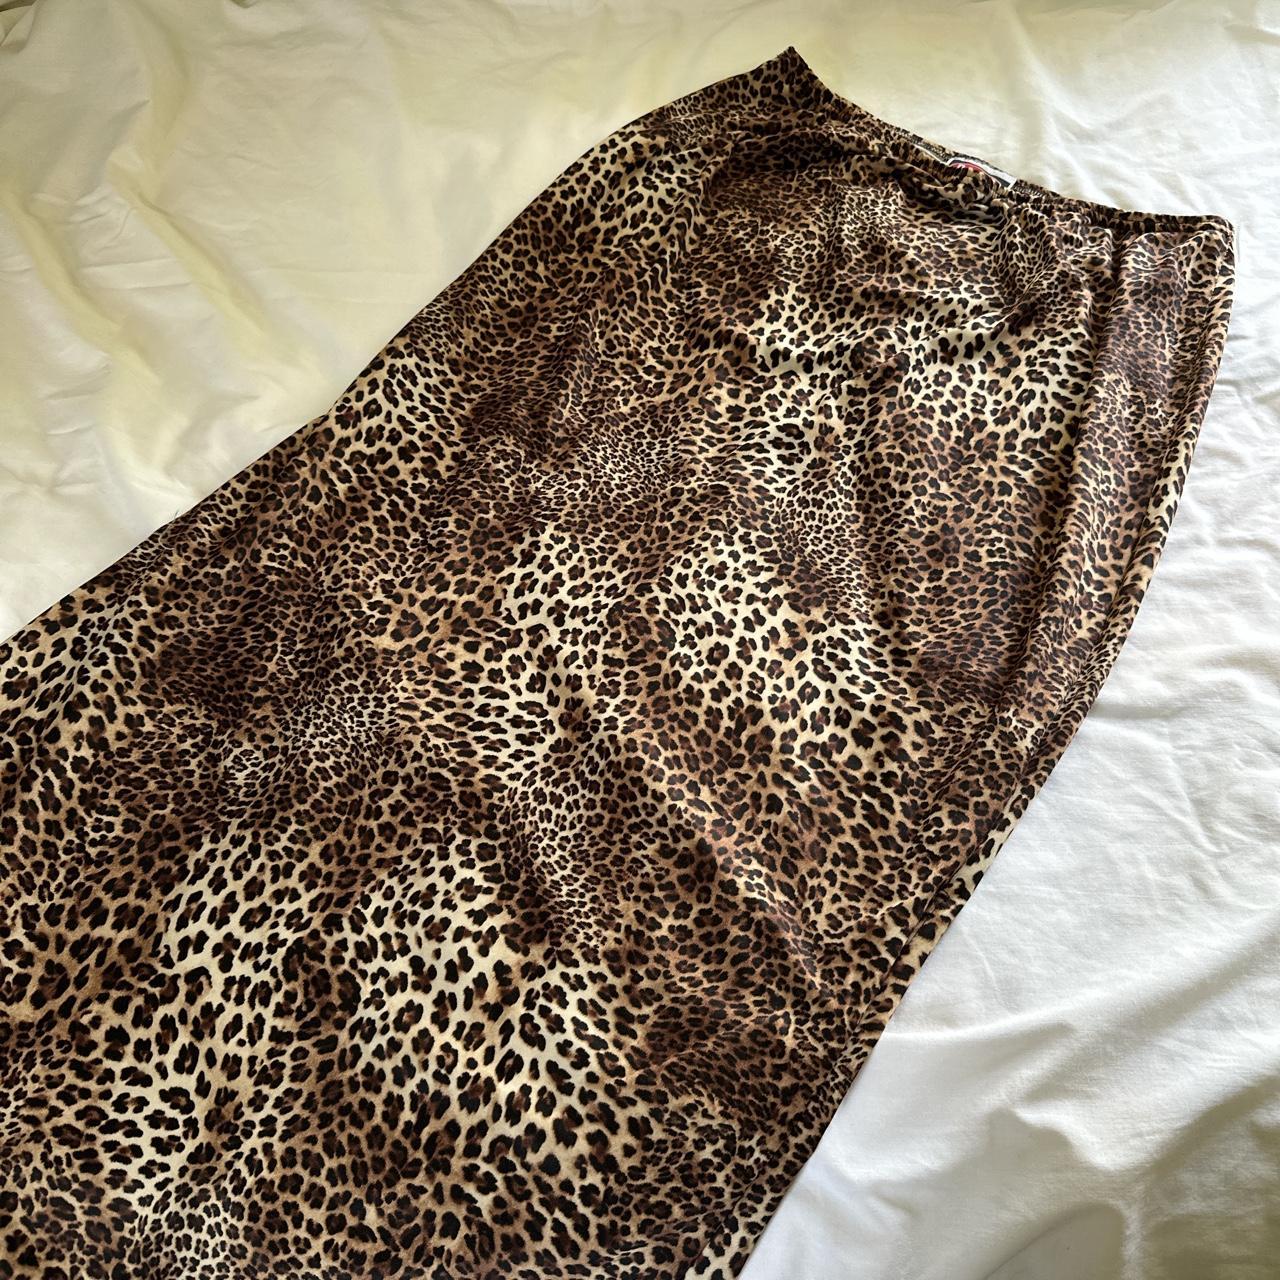 Vintage 90s animal print leopard print maxi skirt by... - Depop